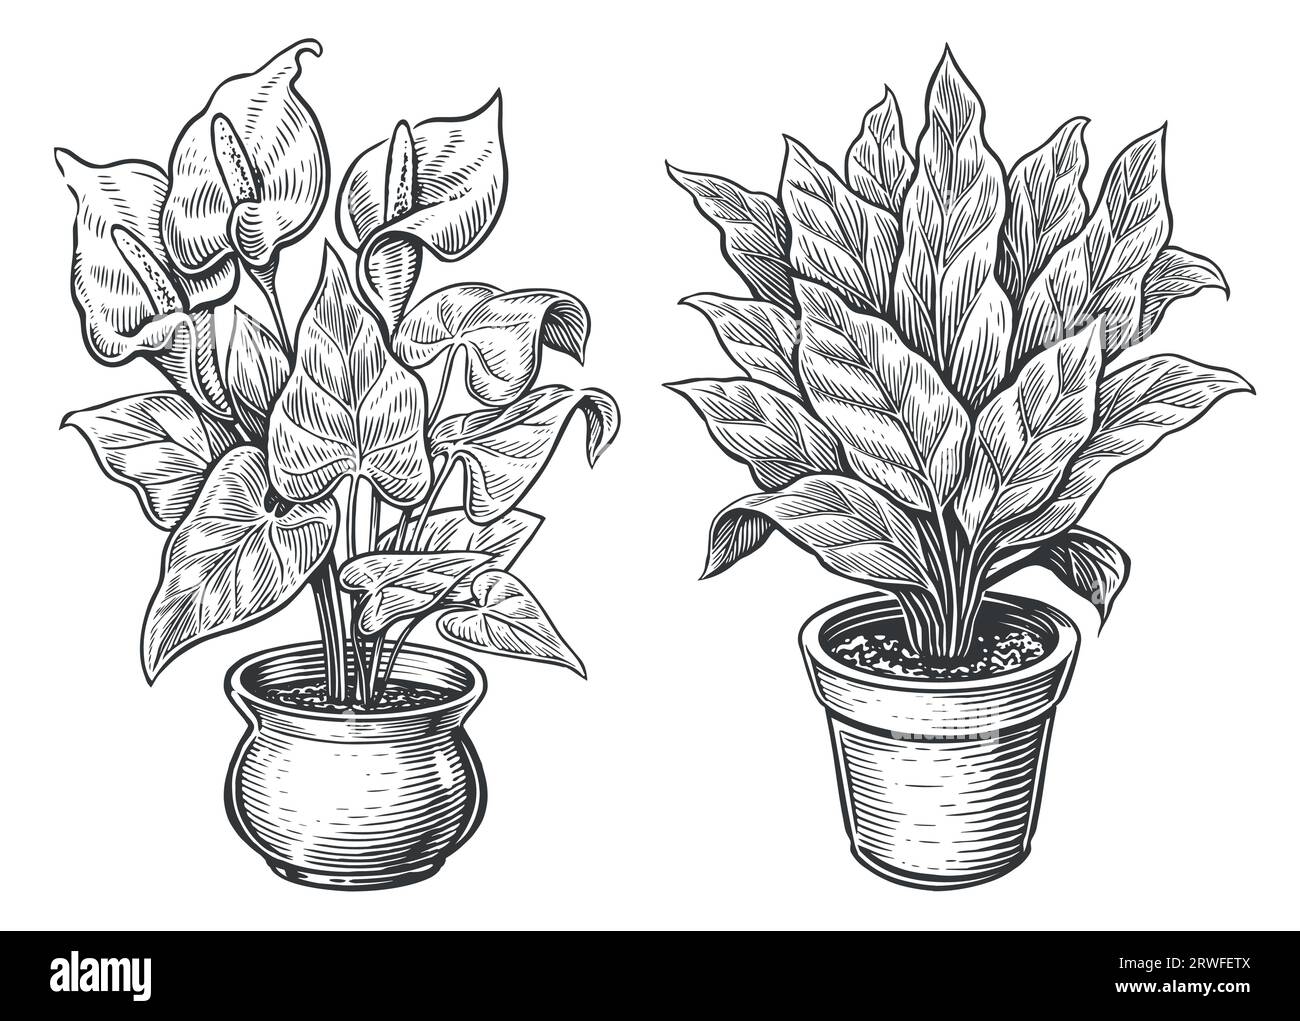 Skizze der Pflanzen in Innenräumen. Zimmerpflanzen, Blumen im Topf im Gravurstil. Vintage-Vektor-Illustration Stock Vektor